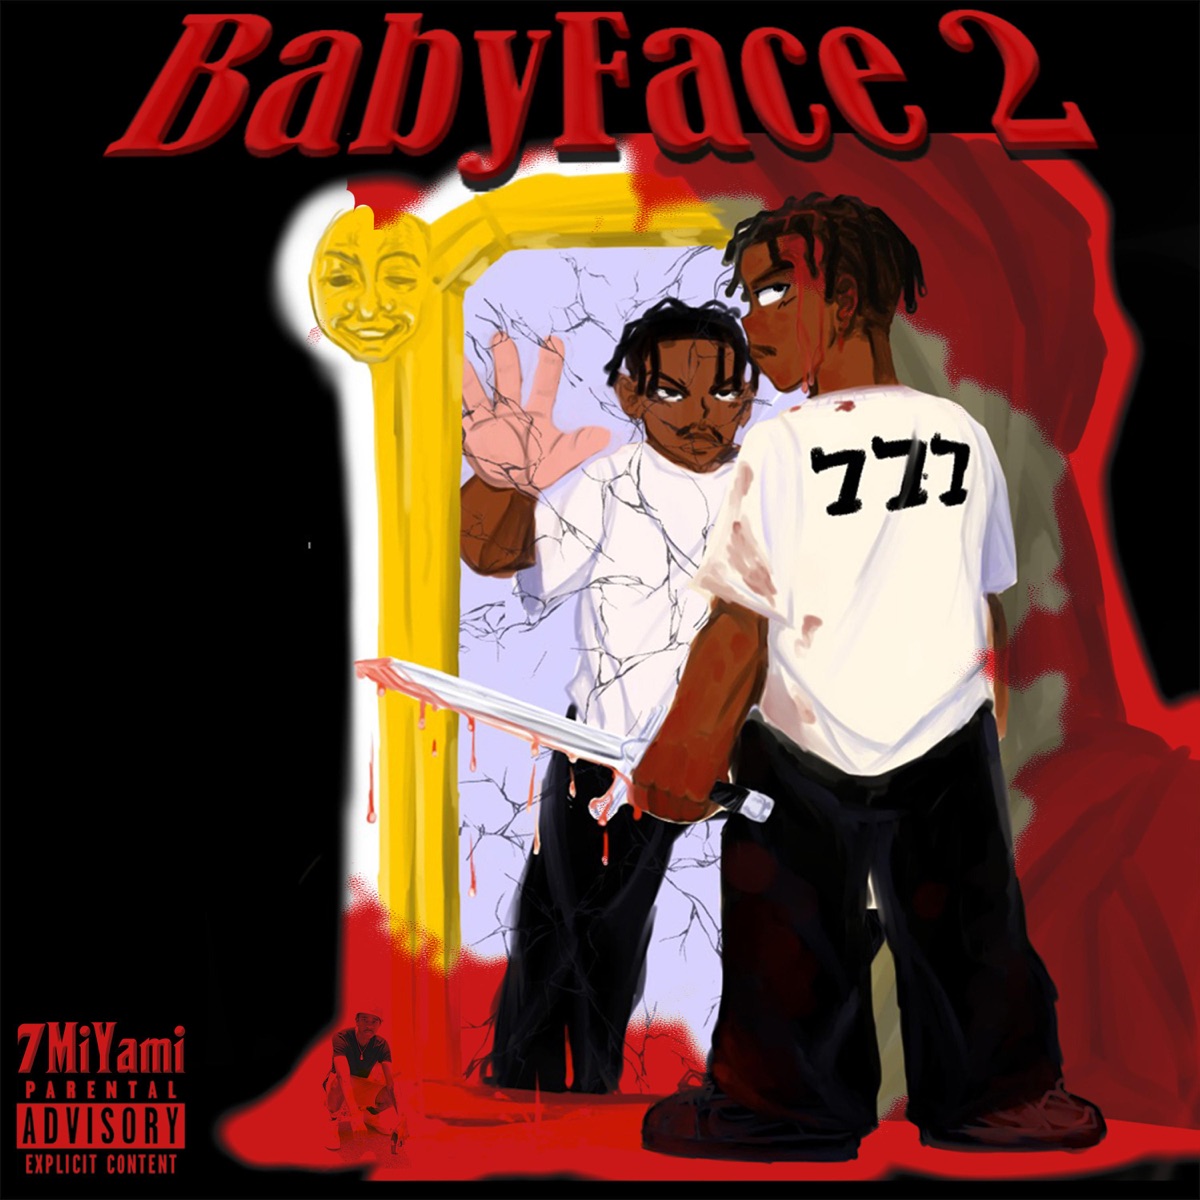 Babyface 2